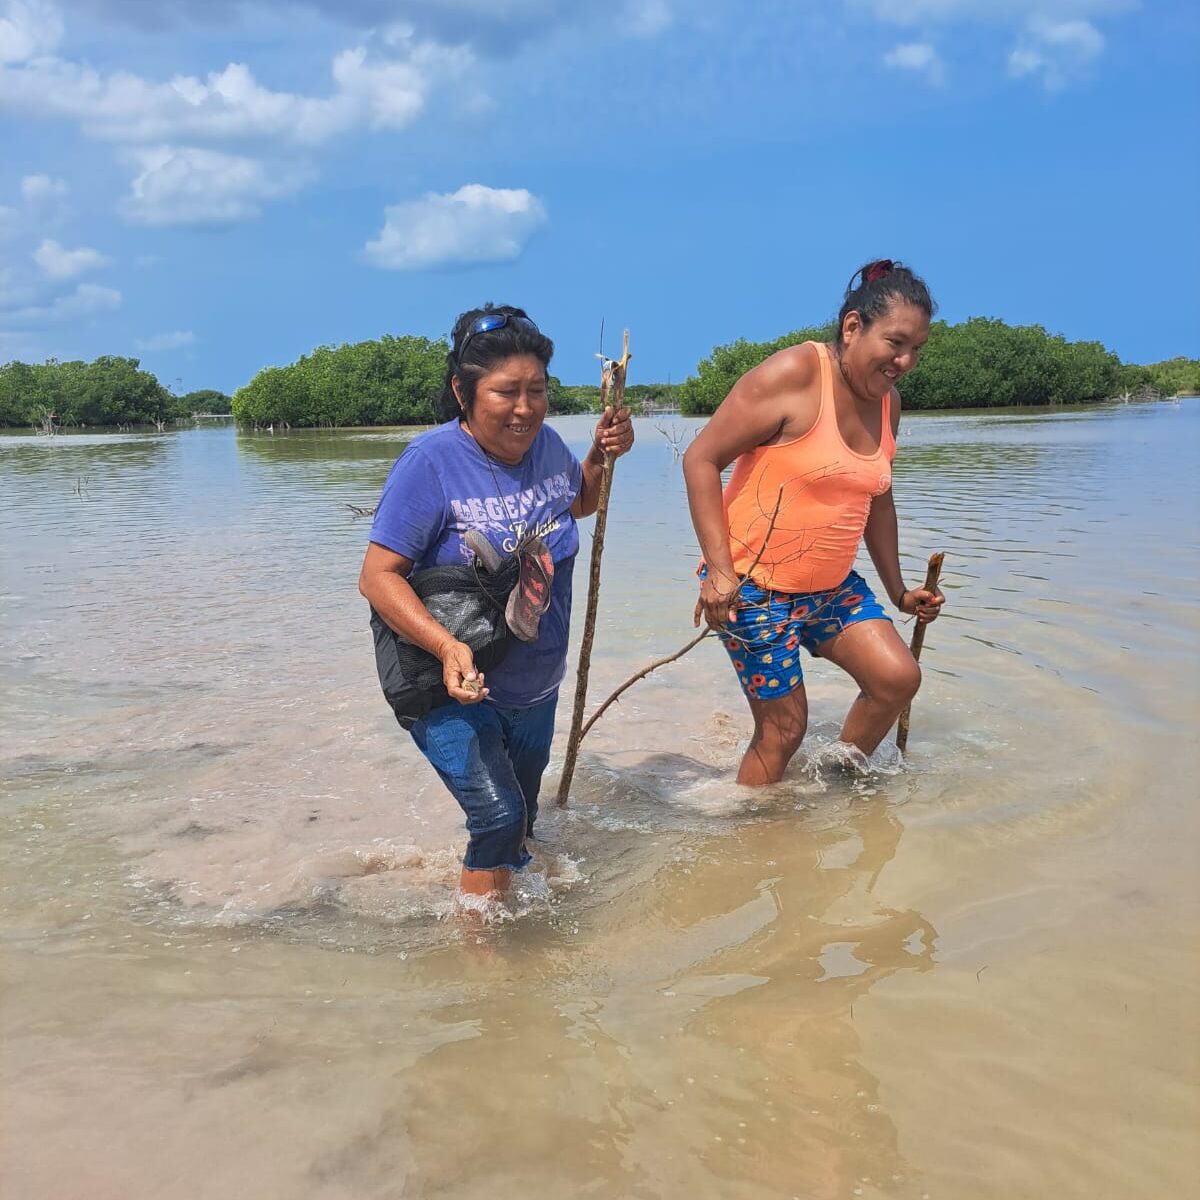 Santa Clara: two women in the water doing restoration work